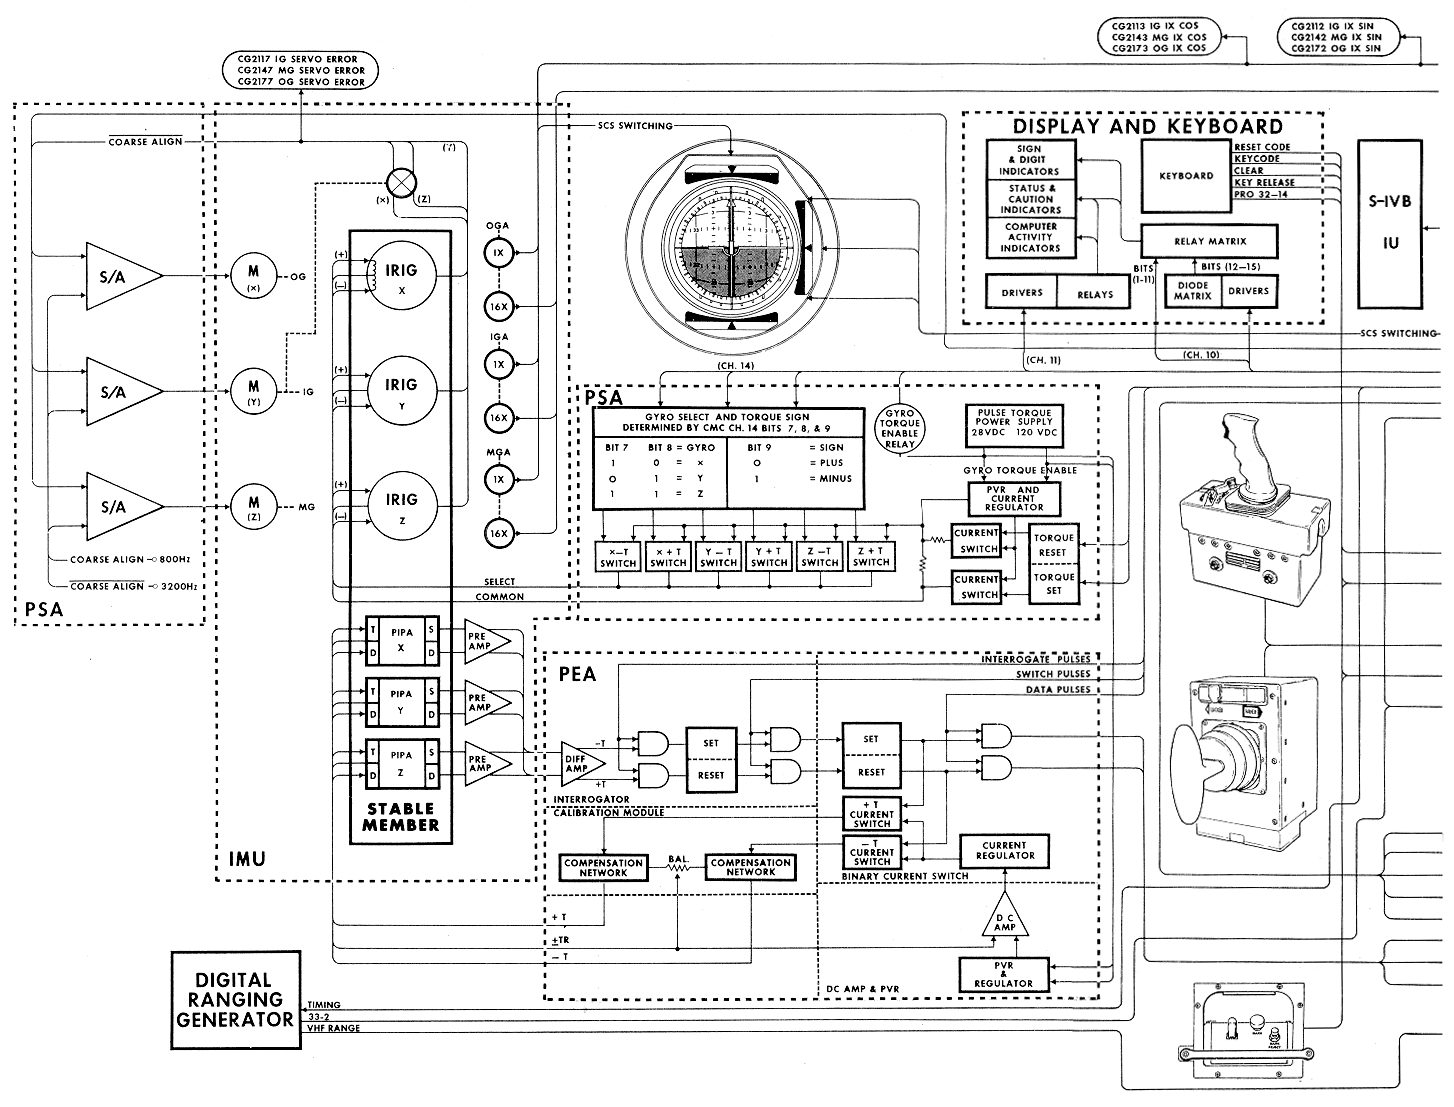 PGNCS Functional Diagram